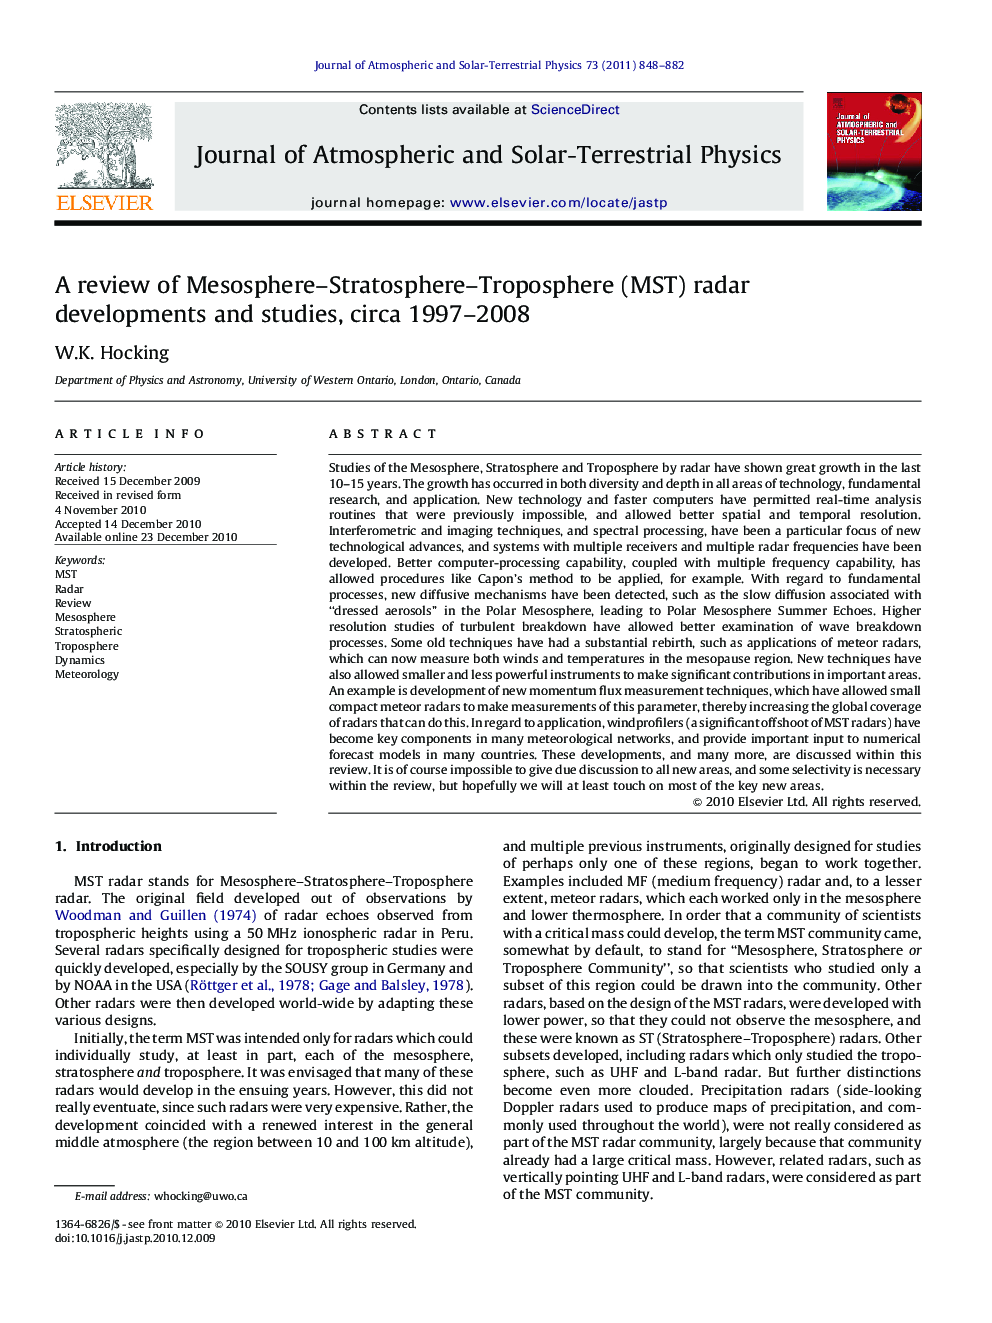 A review of Mesosphere–Stratosphere–Troposphere (MST) radar developments and studies, circa 1997–2008